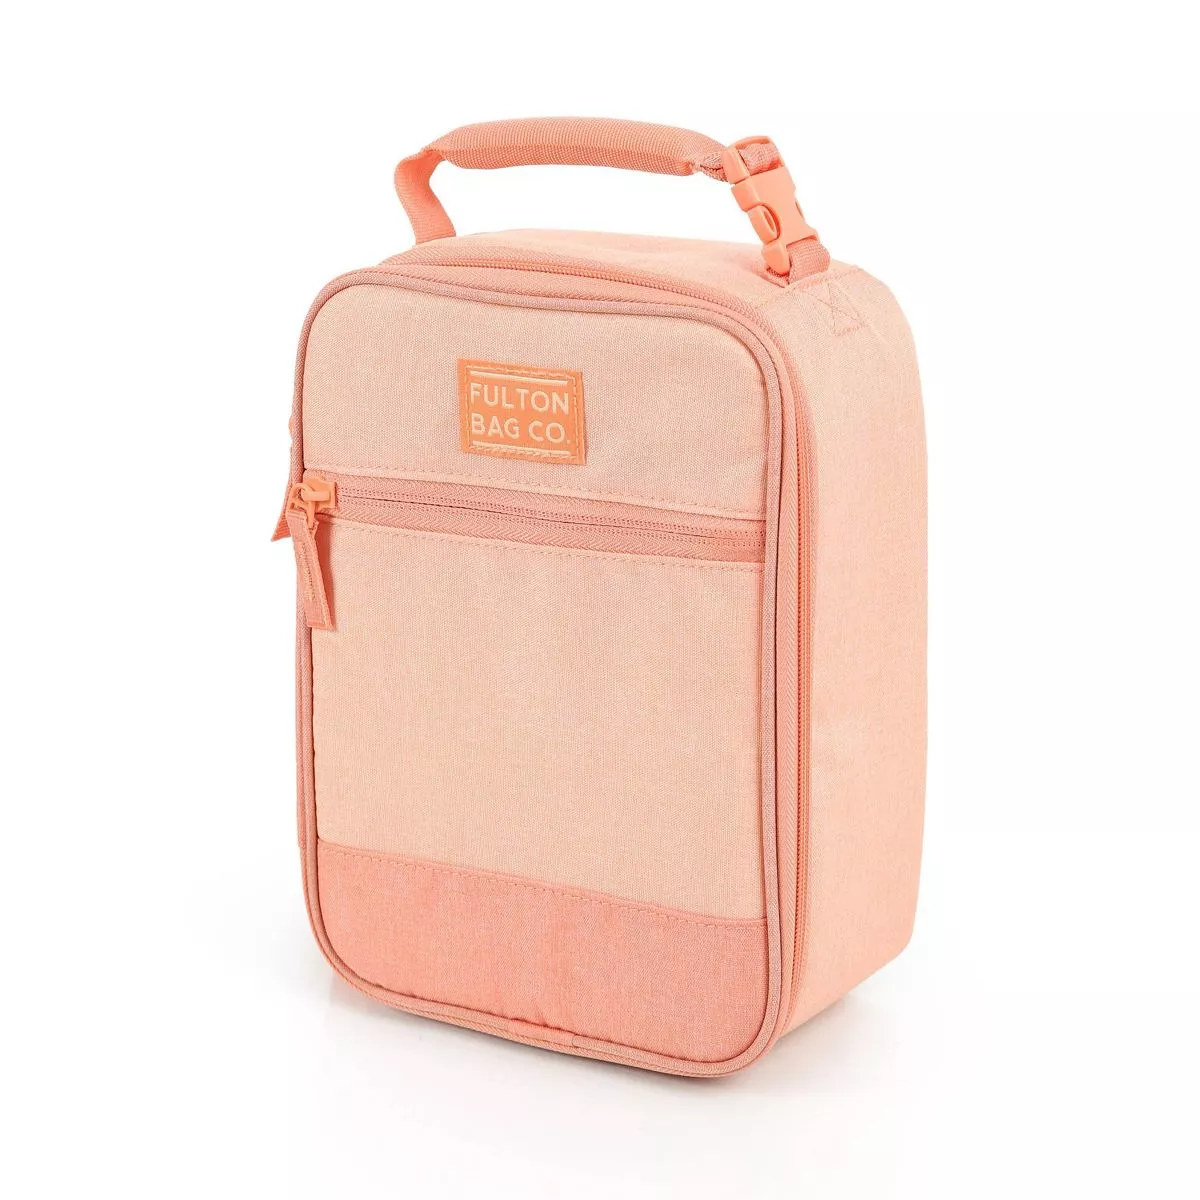 Fulton Bag Co. Upright Lunch Bag Dusty Olive — SafeSavings